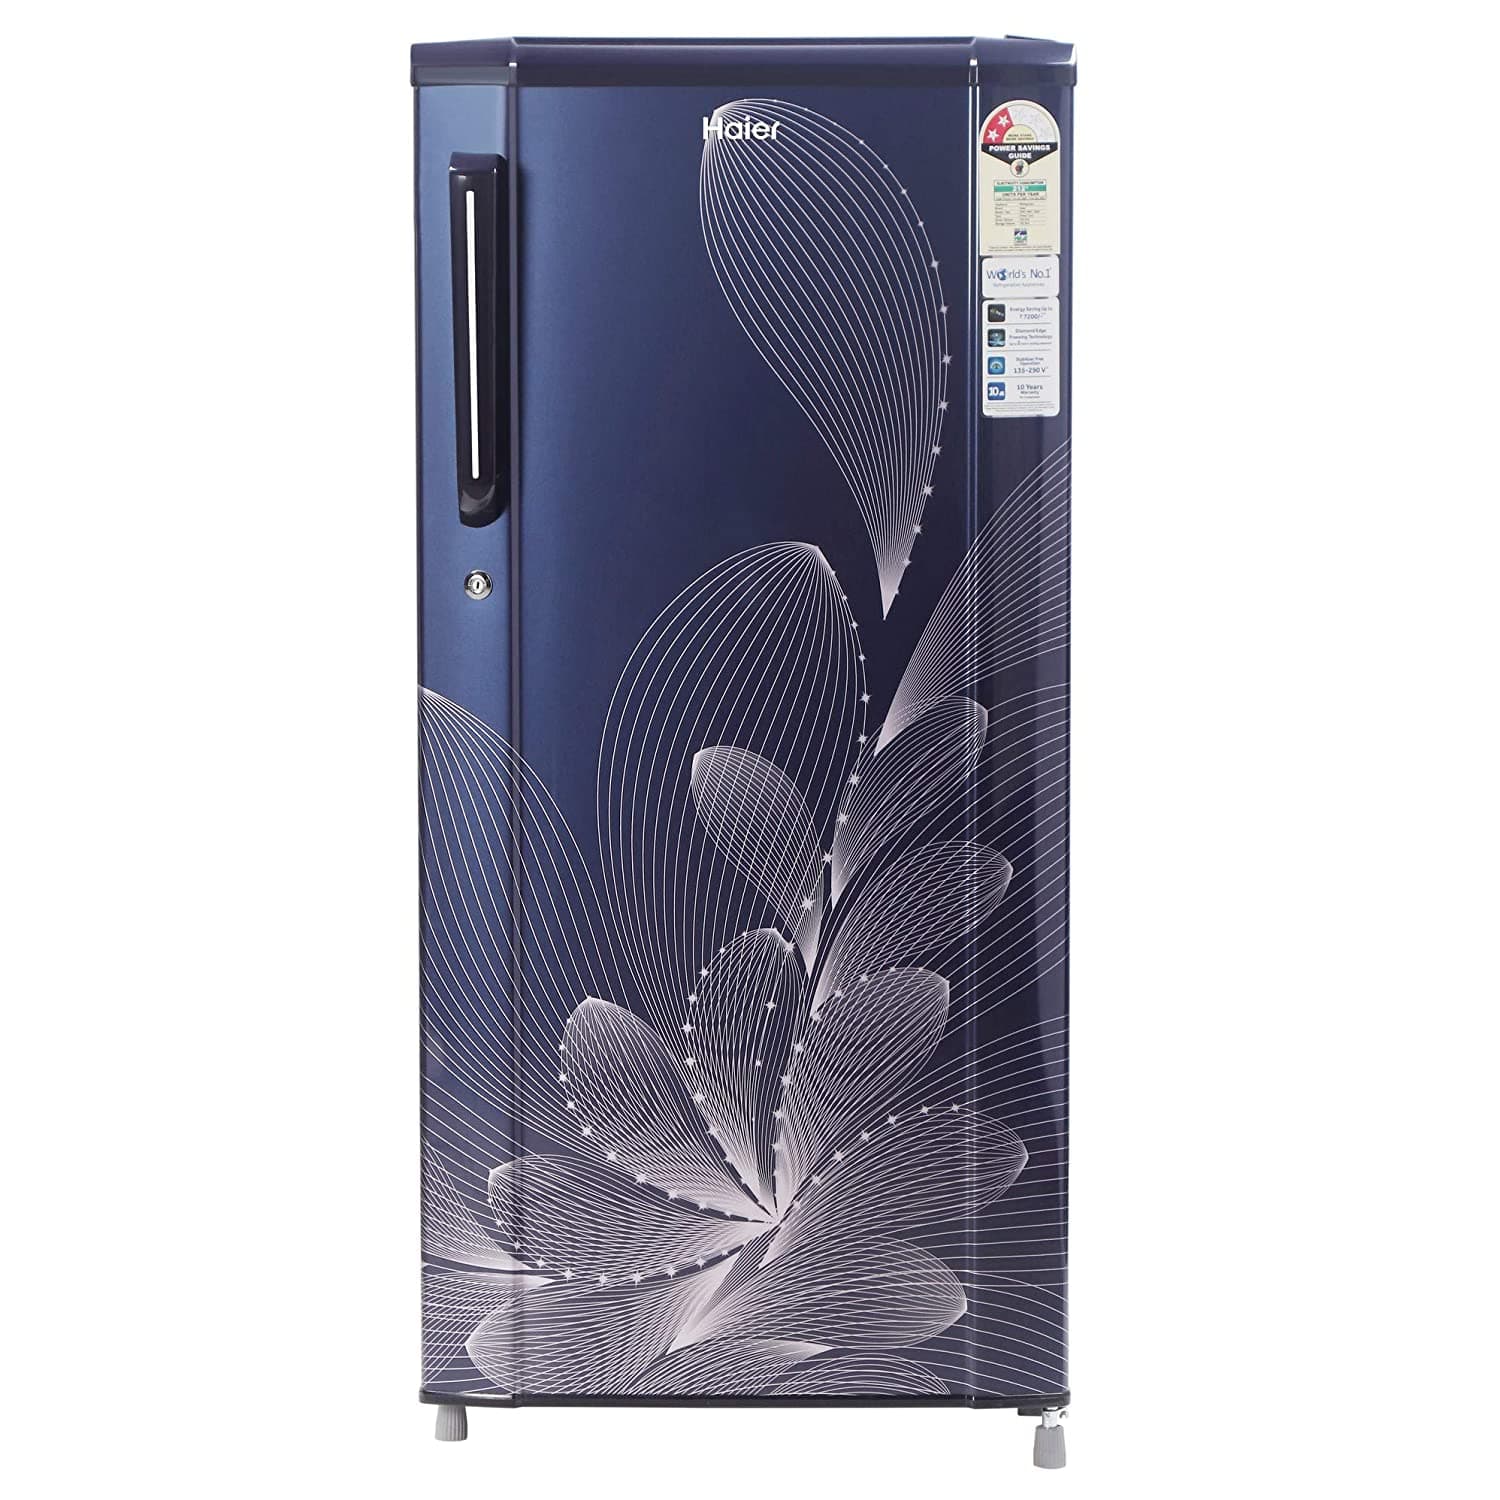 Haier HRD-1902BMO-E 190 Ltr Double Door Refrigerator